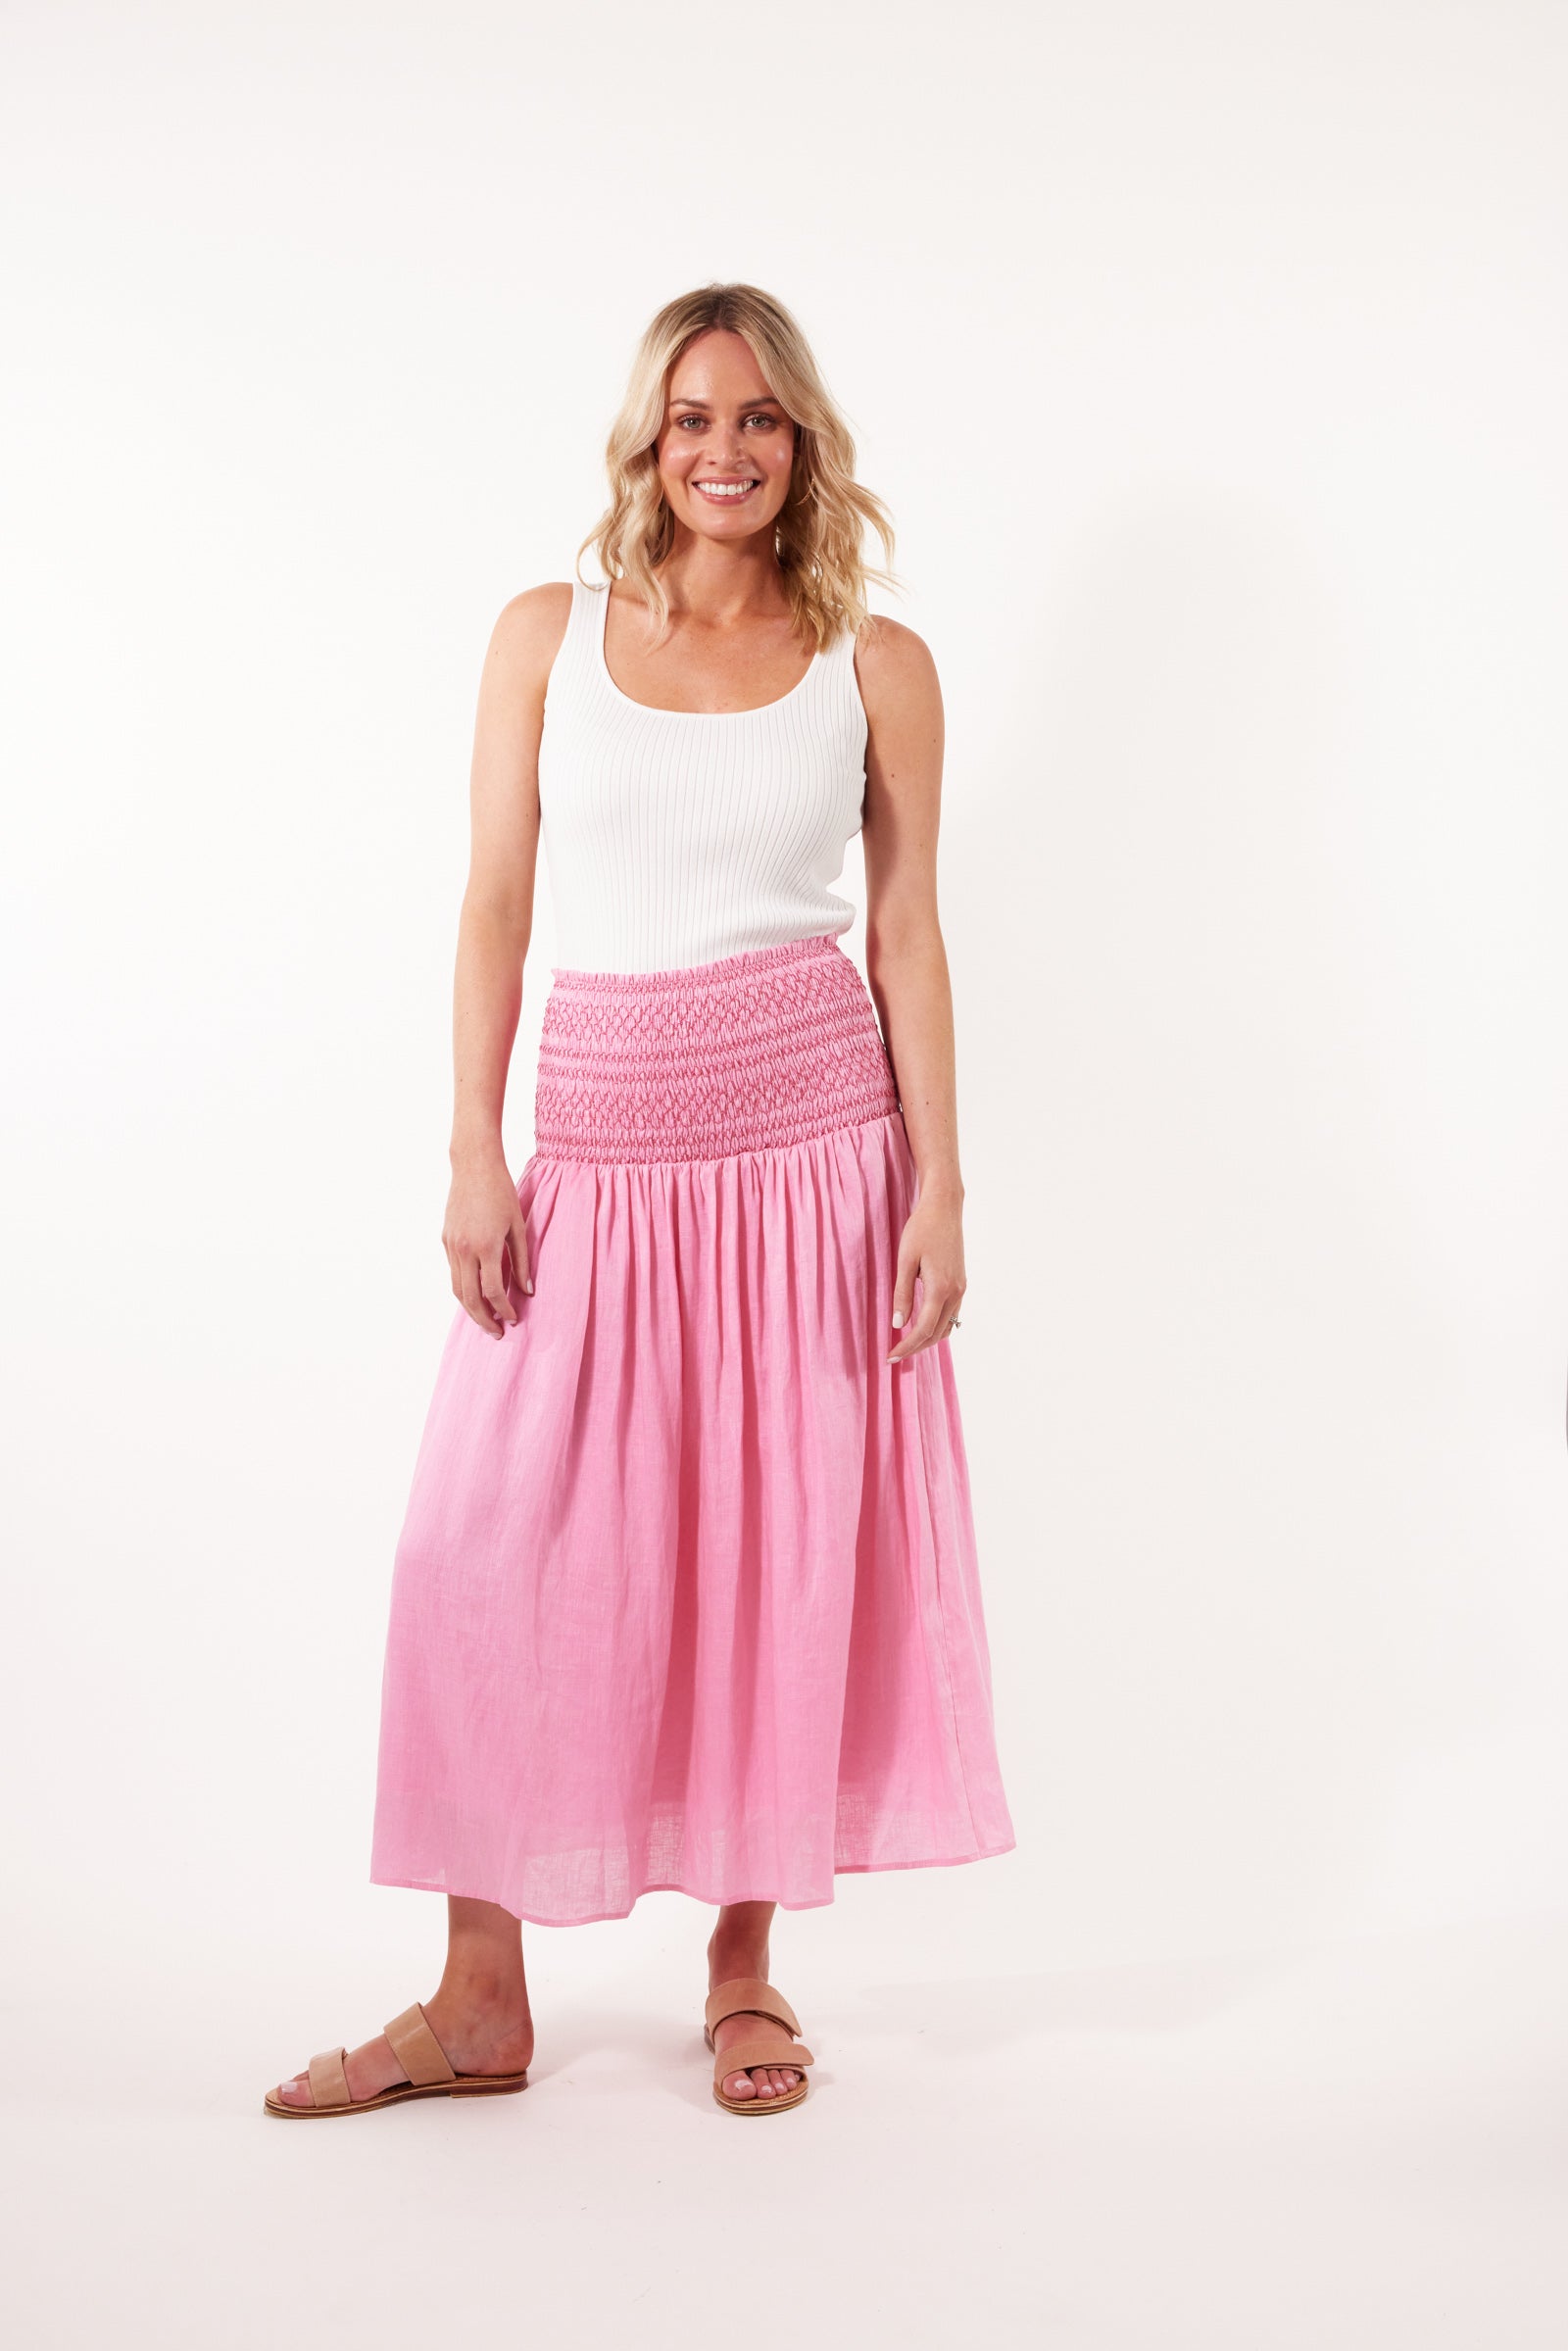 Gala Skirt/Dress - Peony - Isle of Mine Clothing - Dress Strapless / Skirt